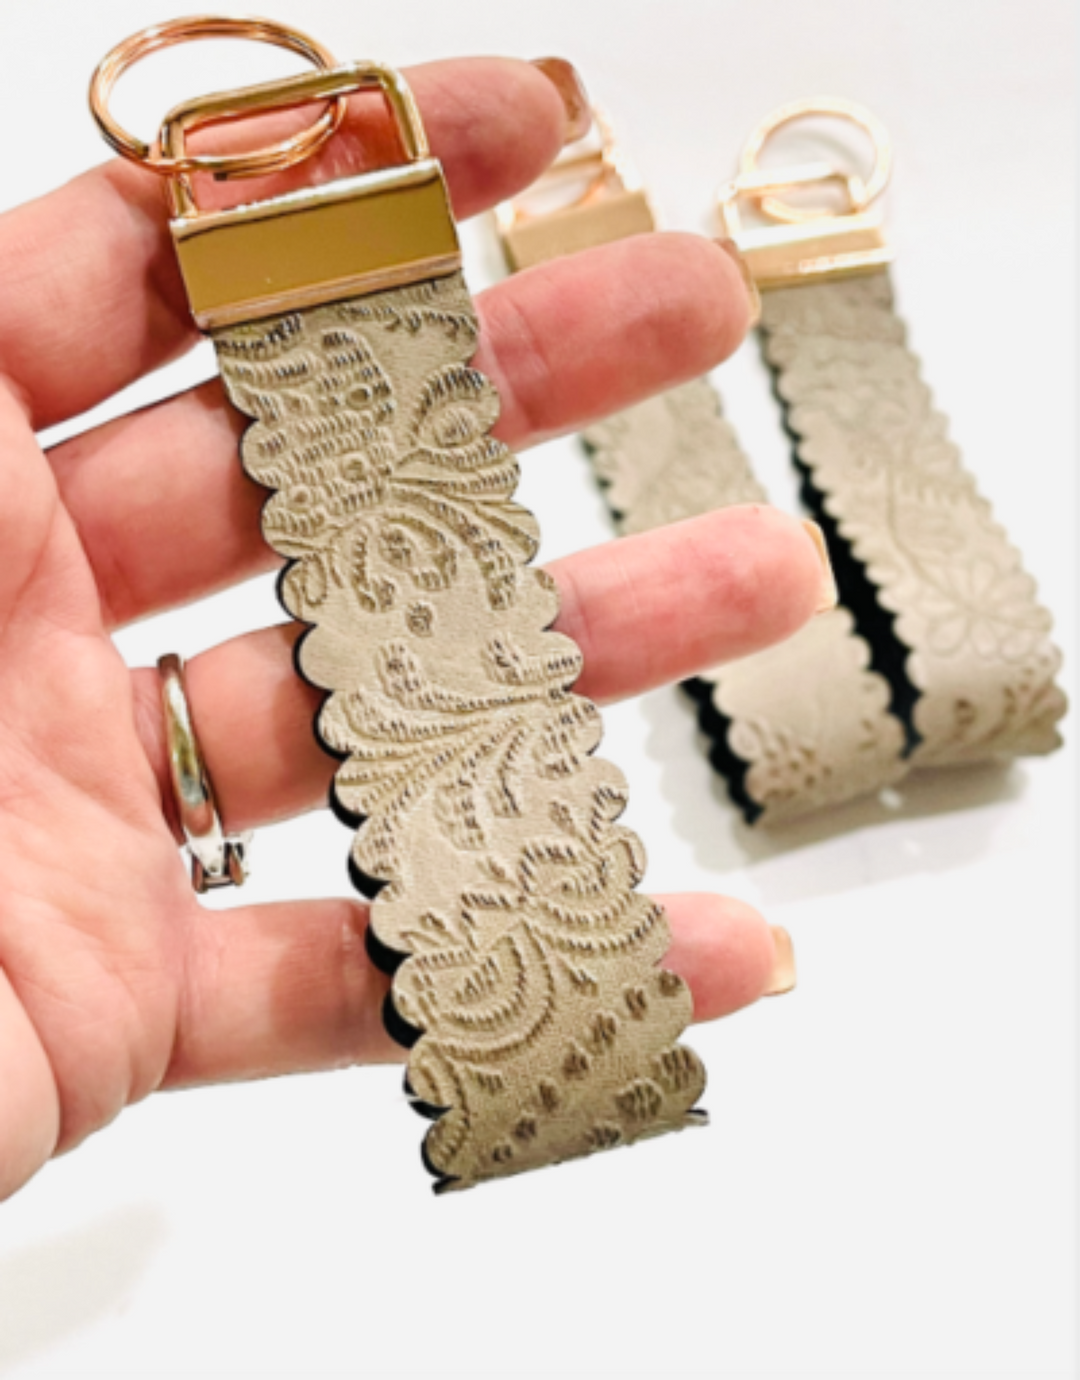 Vintage Scallop Key Fob Steel Rule Multi Die for Wristlet Key Chains